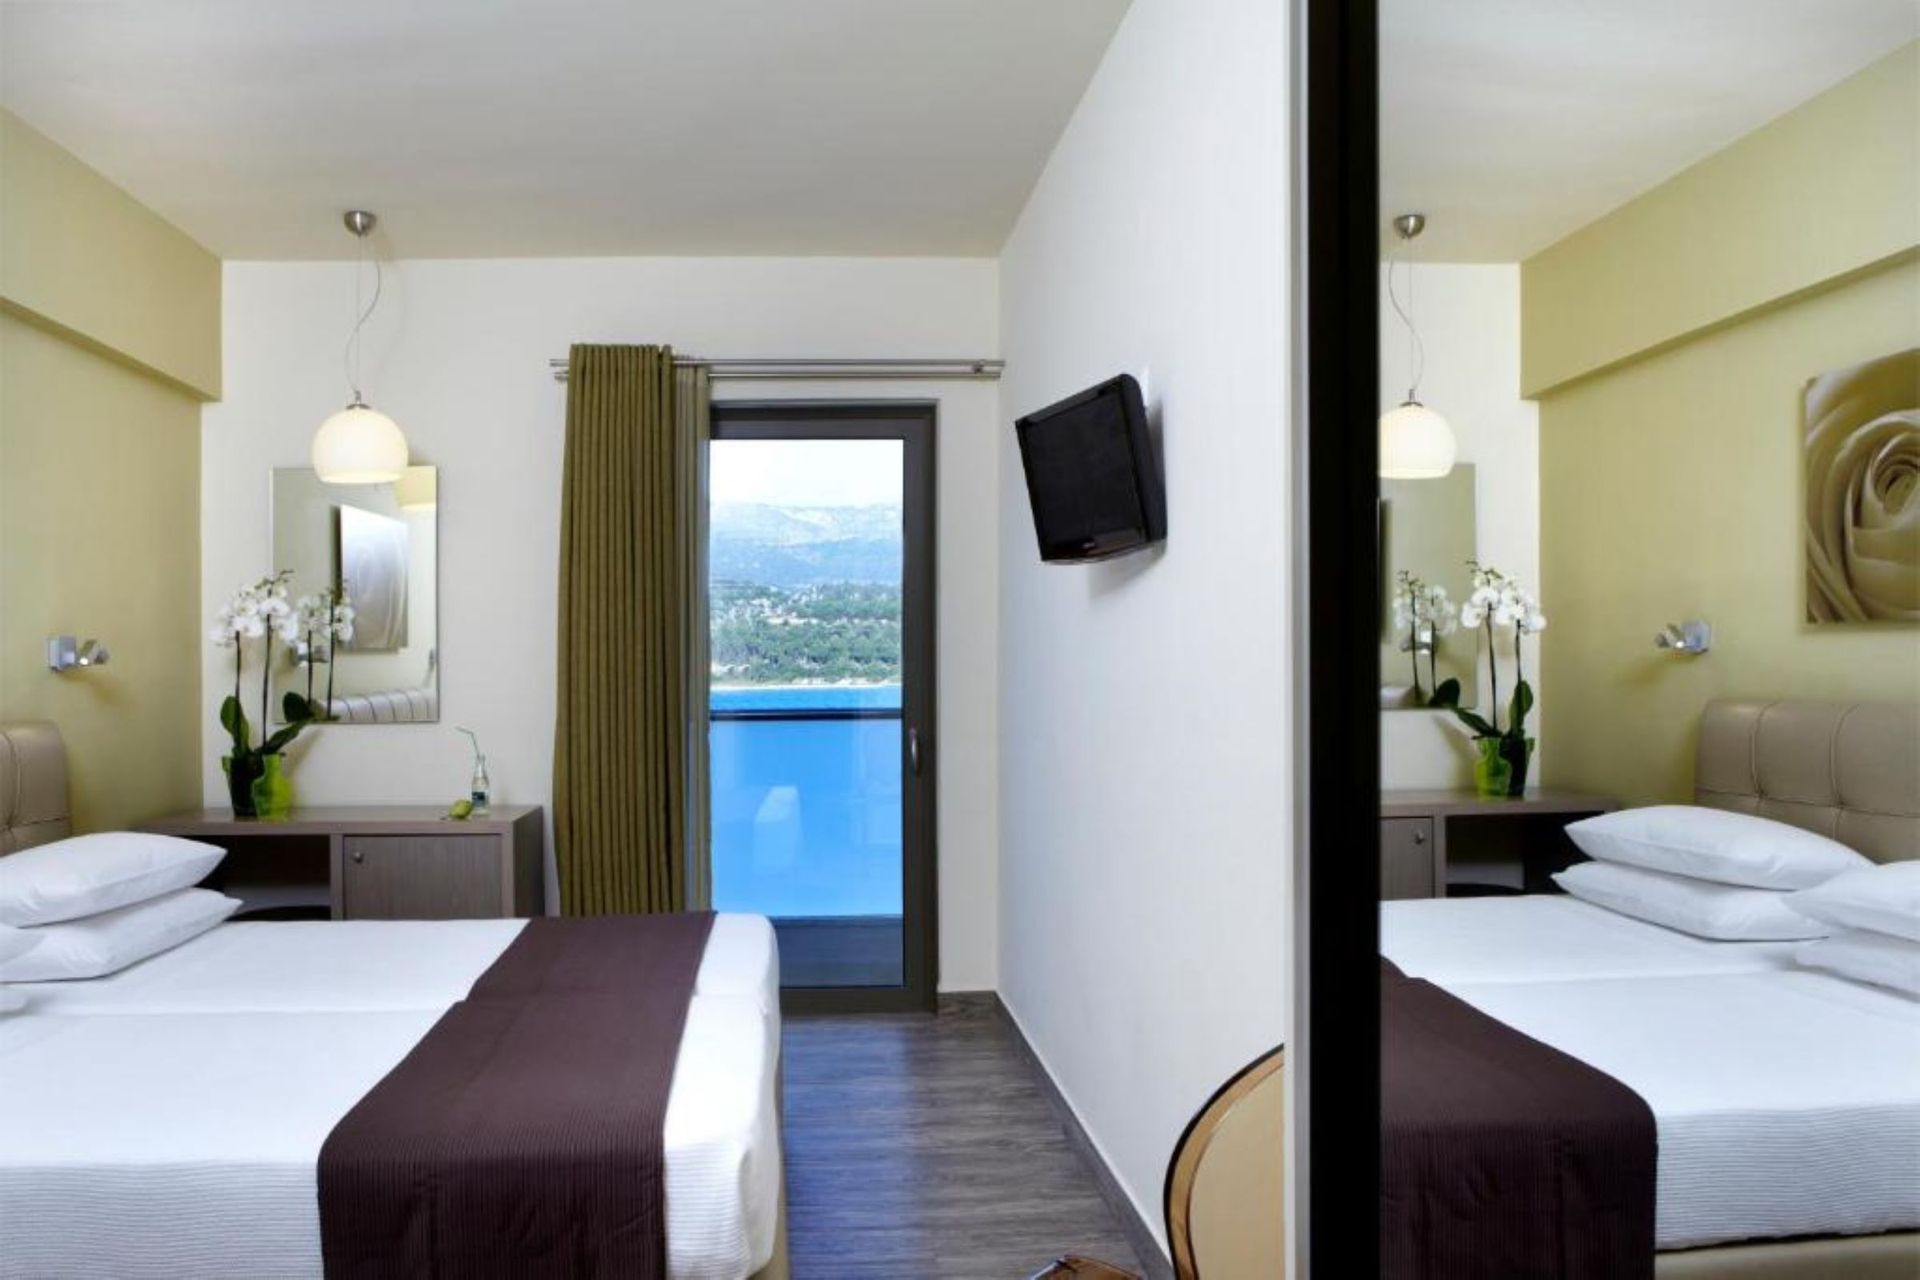 Mouikis Hotel - Κεφαλονιά ✦ 2 Ημέρες (1 Διανυκτέρευση) ✦ 2 άτομα ✦ 2 ✦ έως 30/09/2023 ✦ Υπέροχη Τοποθεσία!